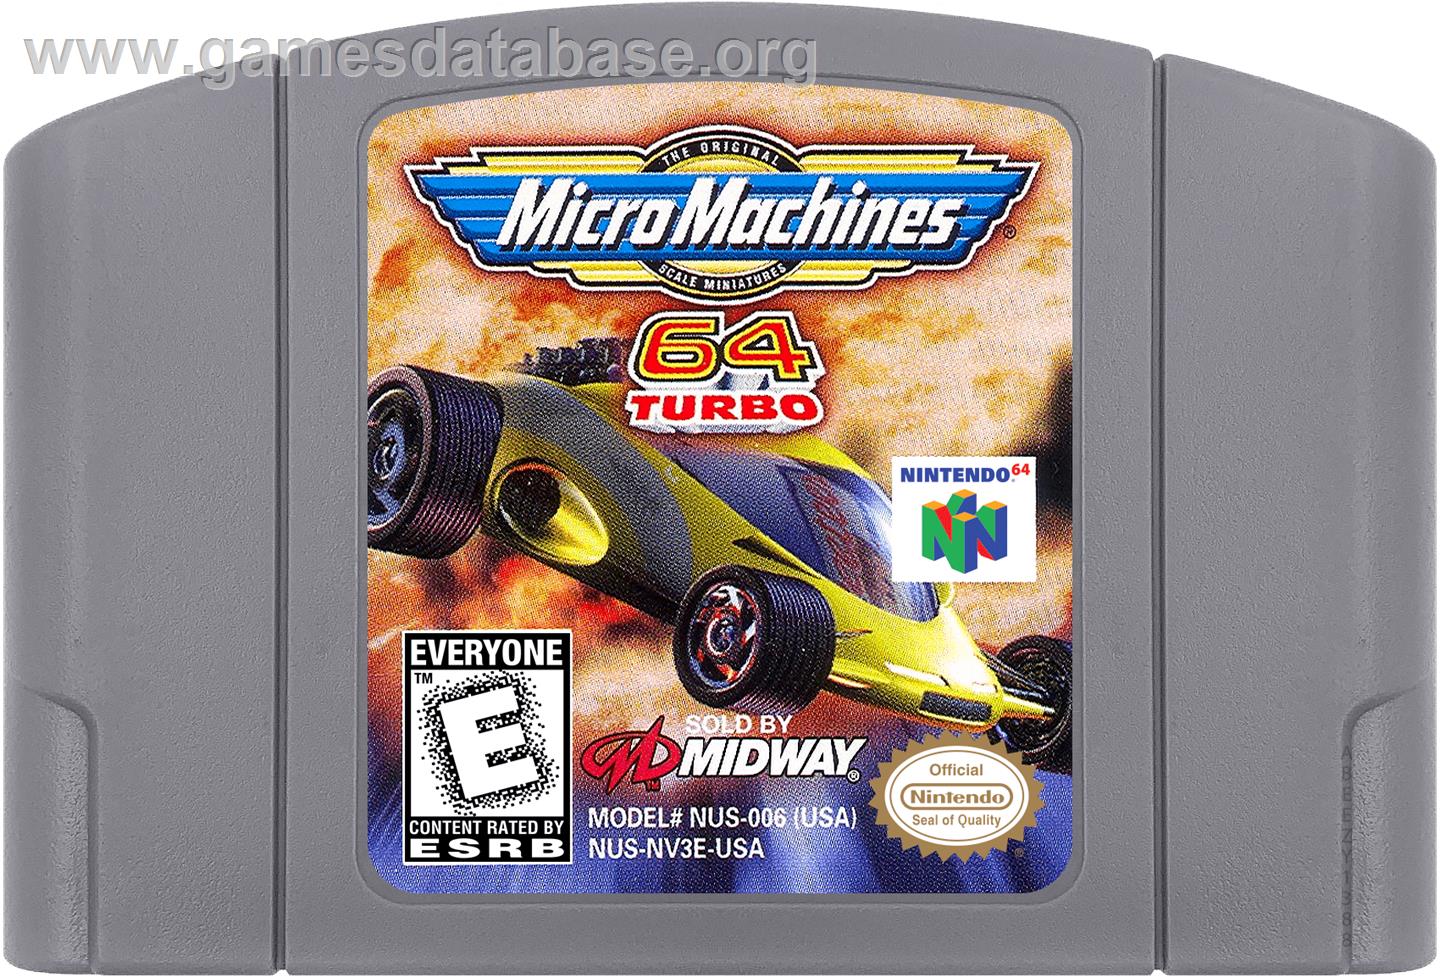 Micro Machines 64 Turbo - Nintendo N64 - Artwork - Cartridge